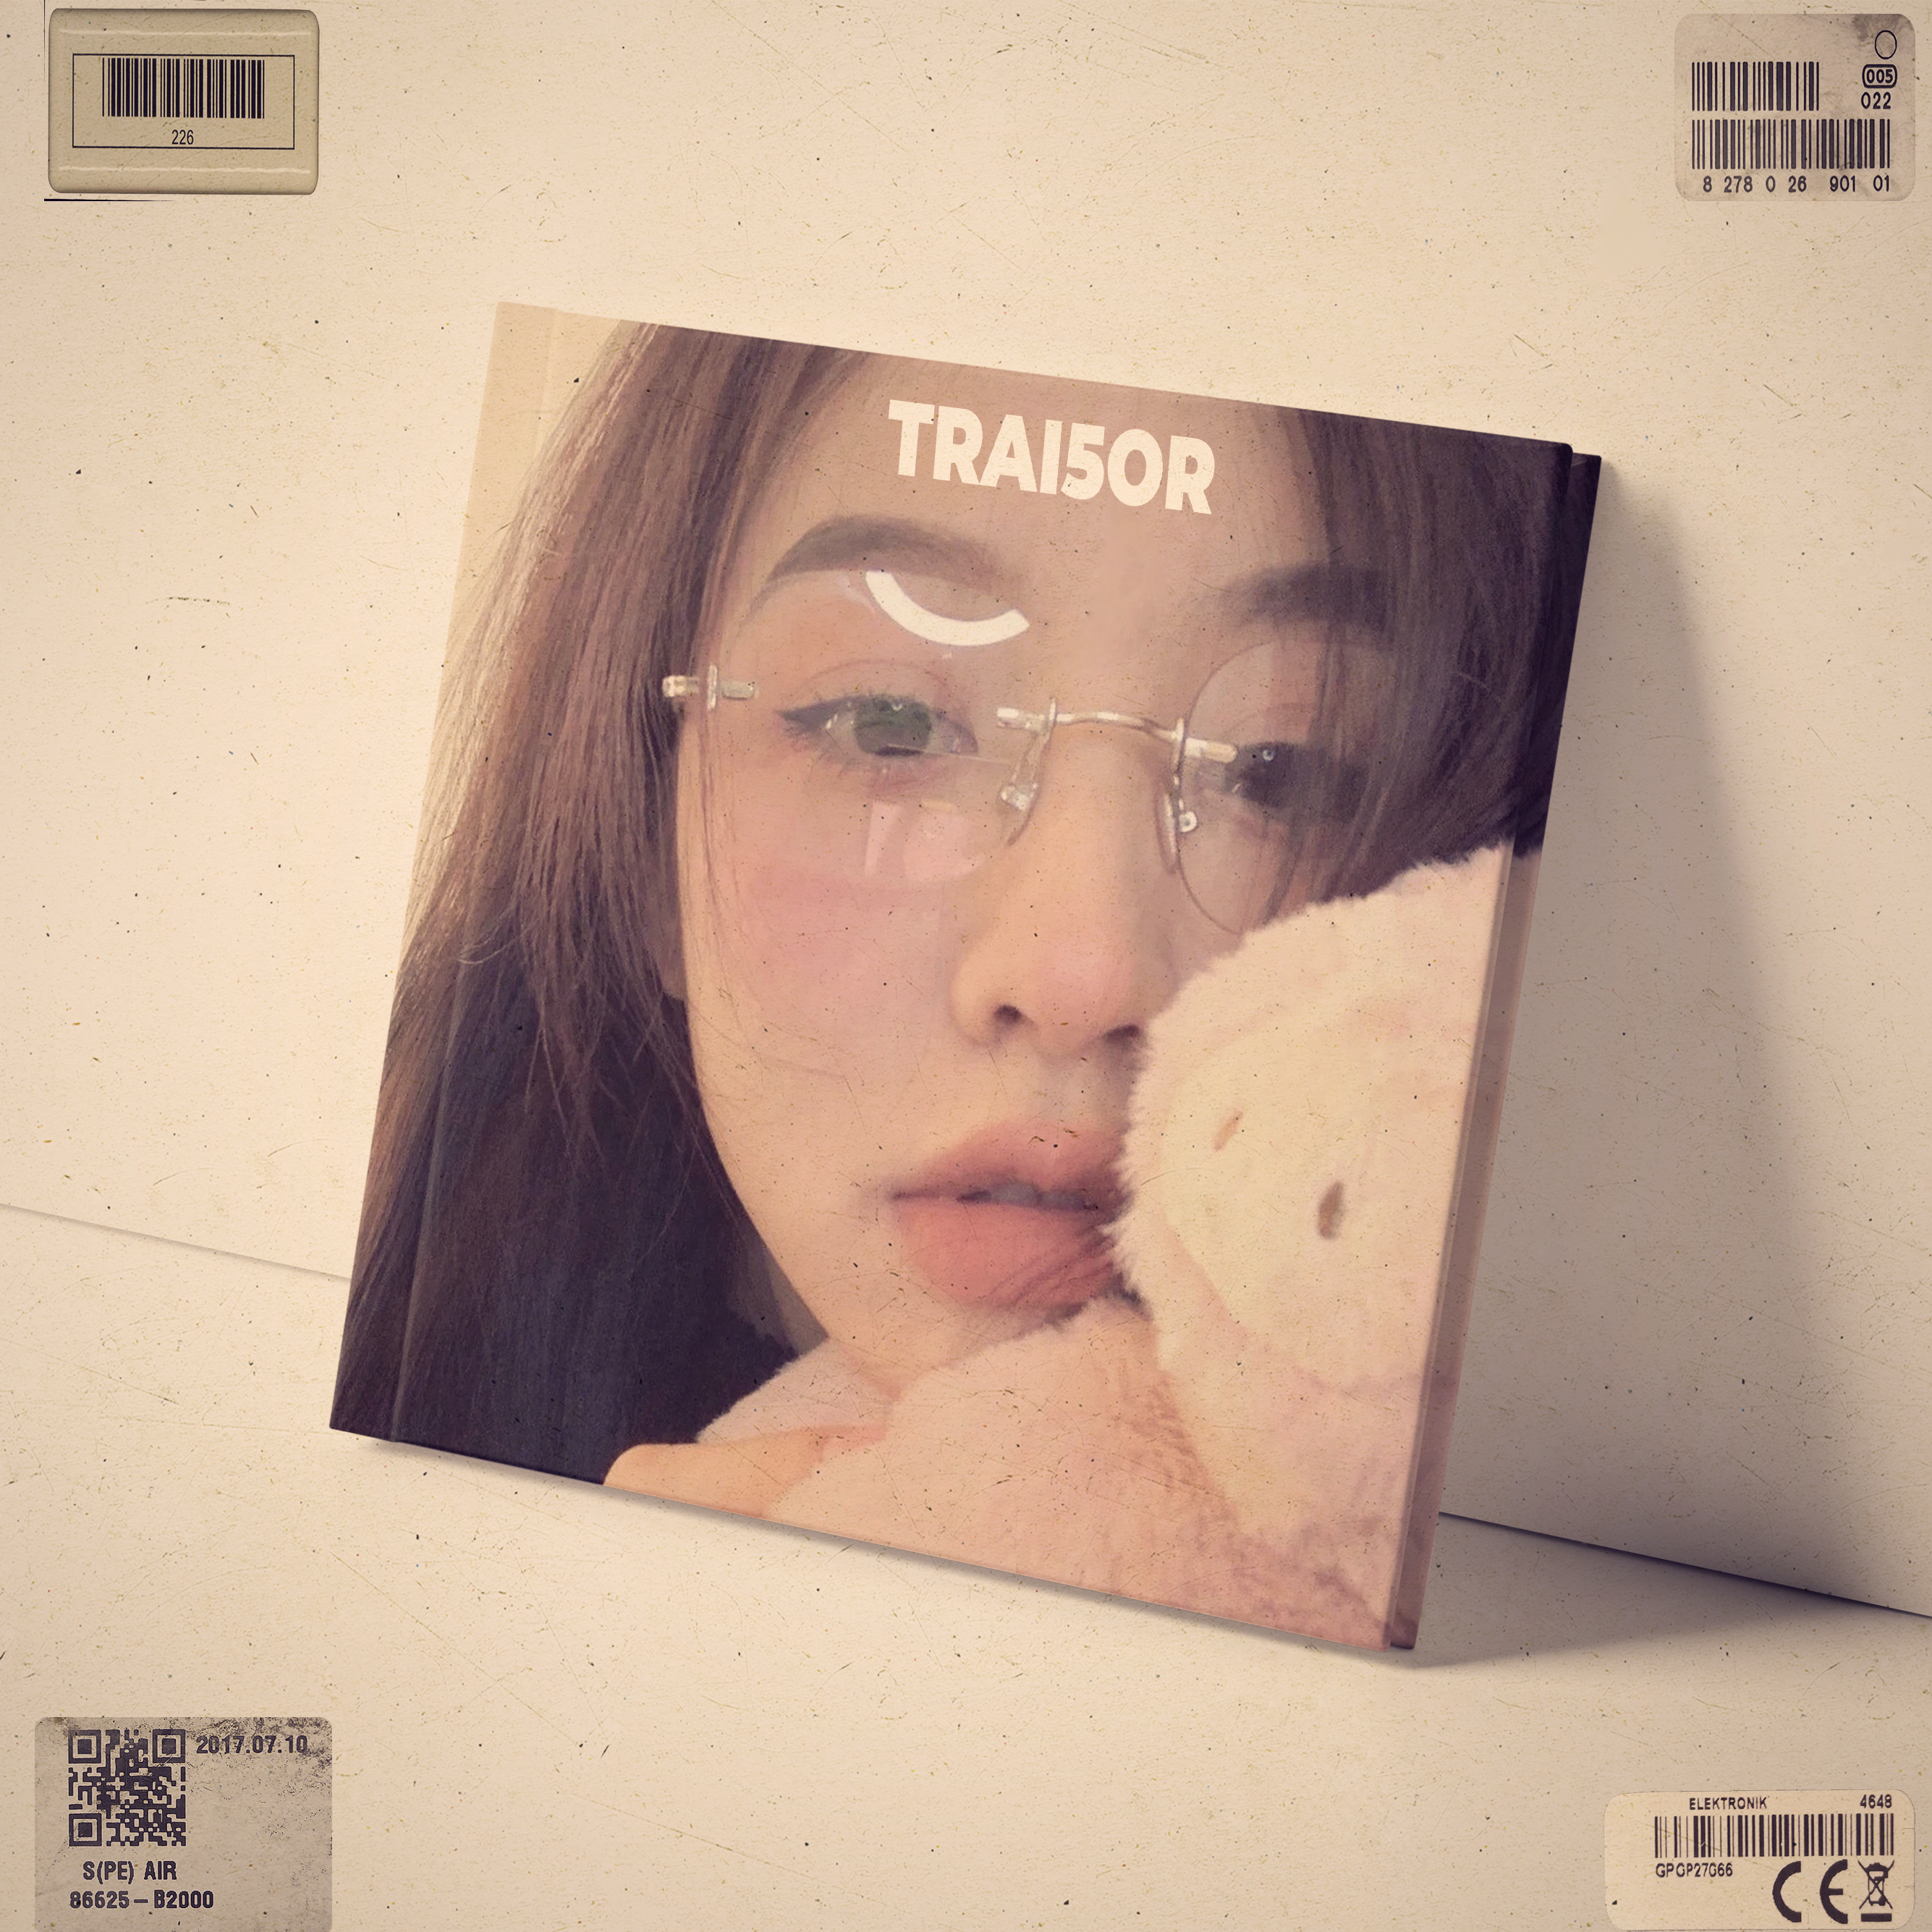 Trai5or - [FREE] Lil Tjay x YXNG K.A Type Beat ~ Rejected